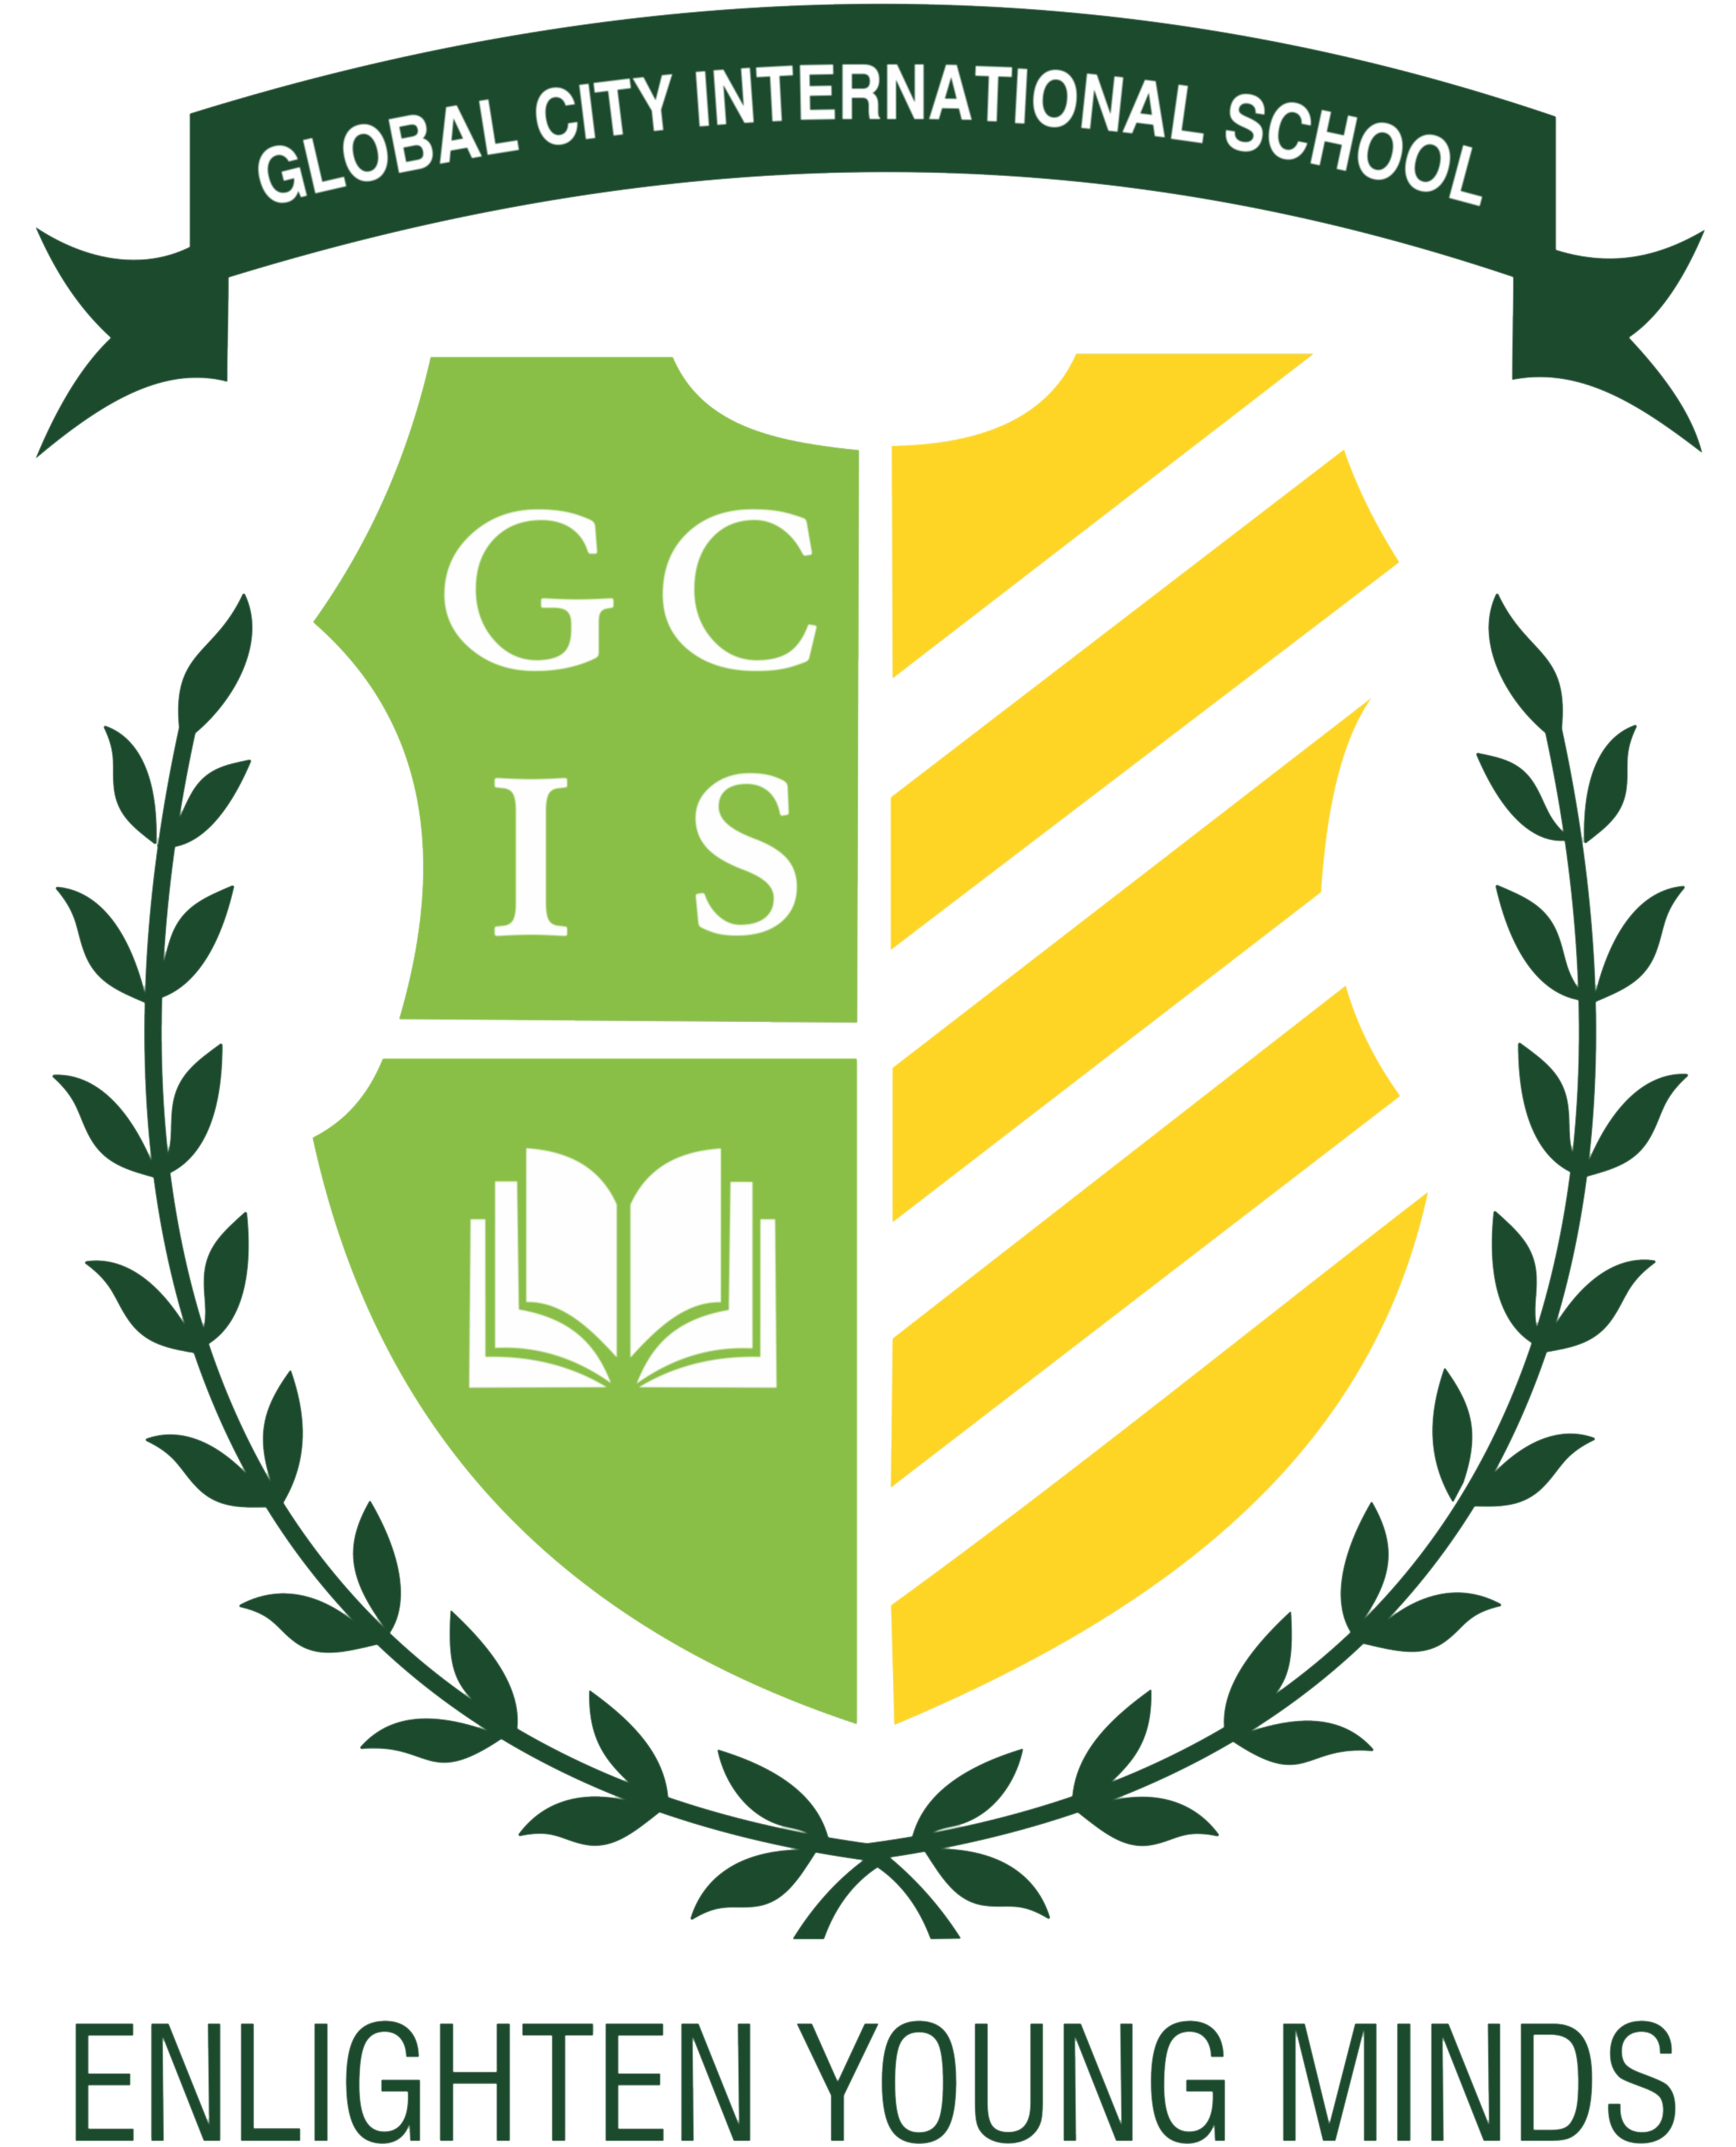 Global City International School|Schools|Education